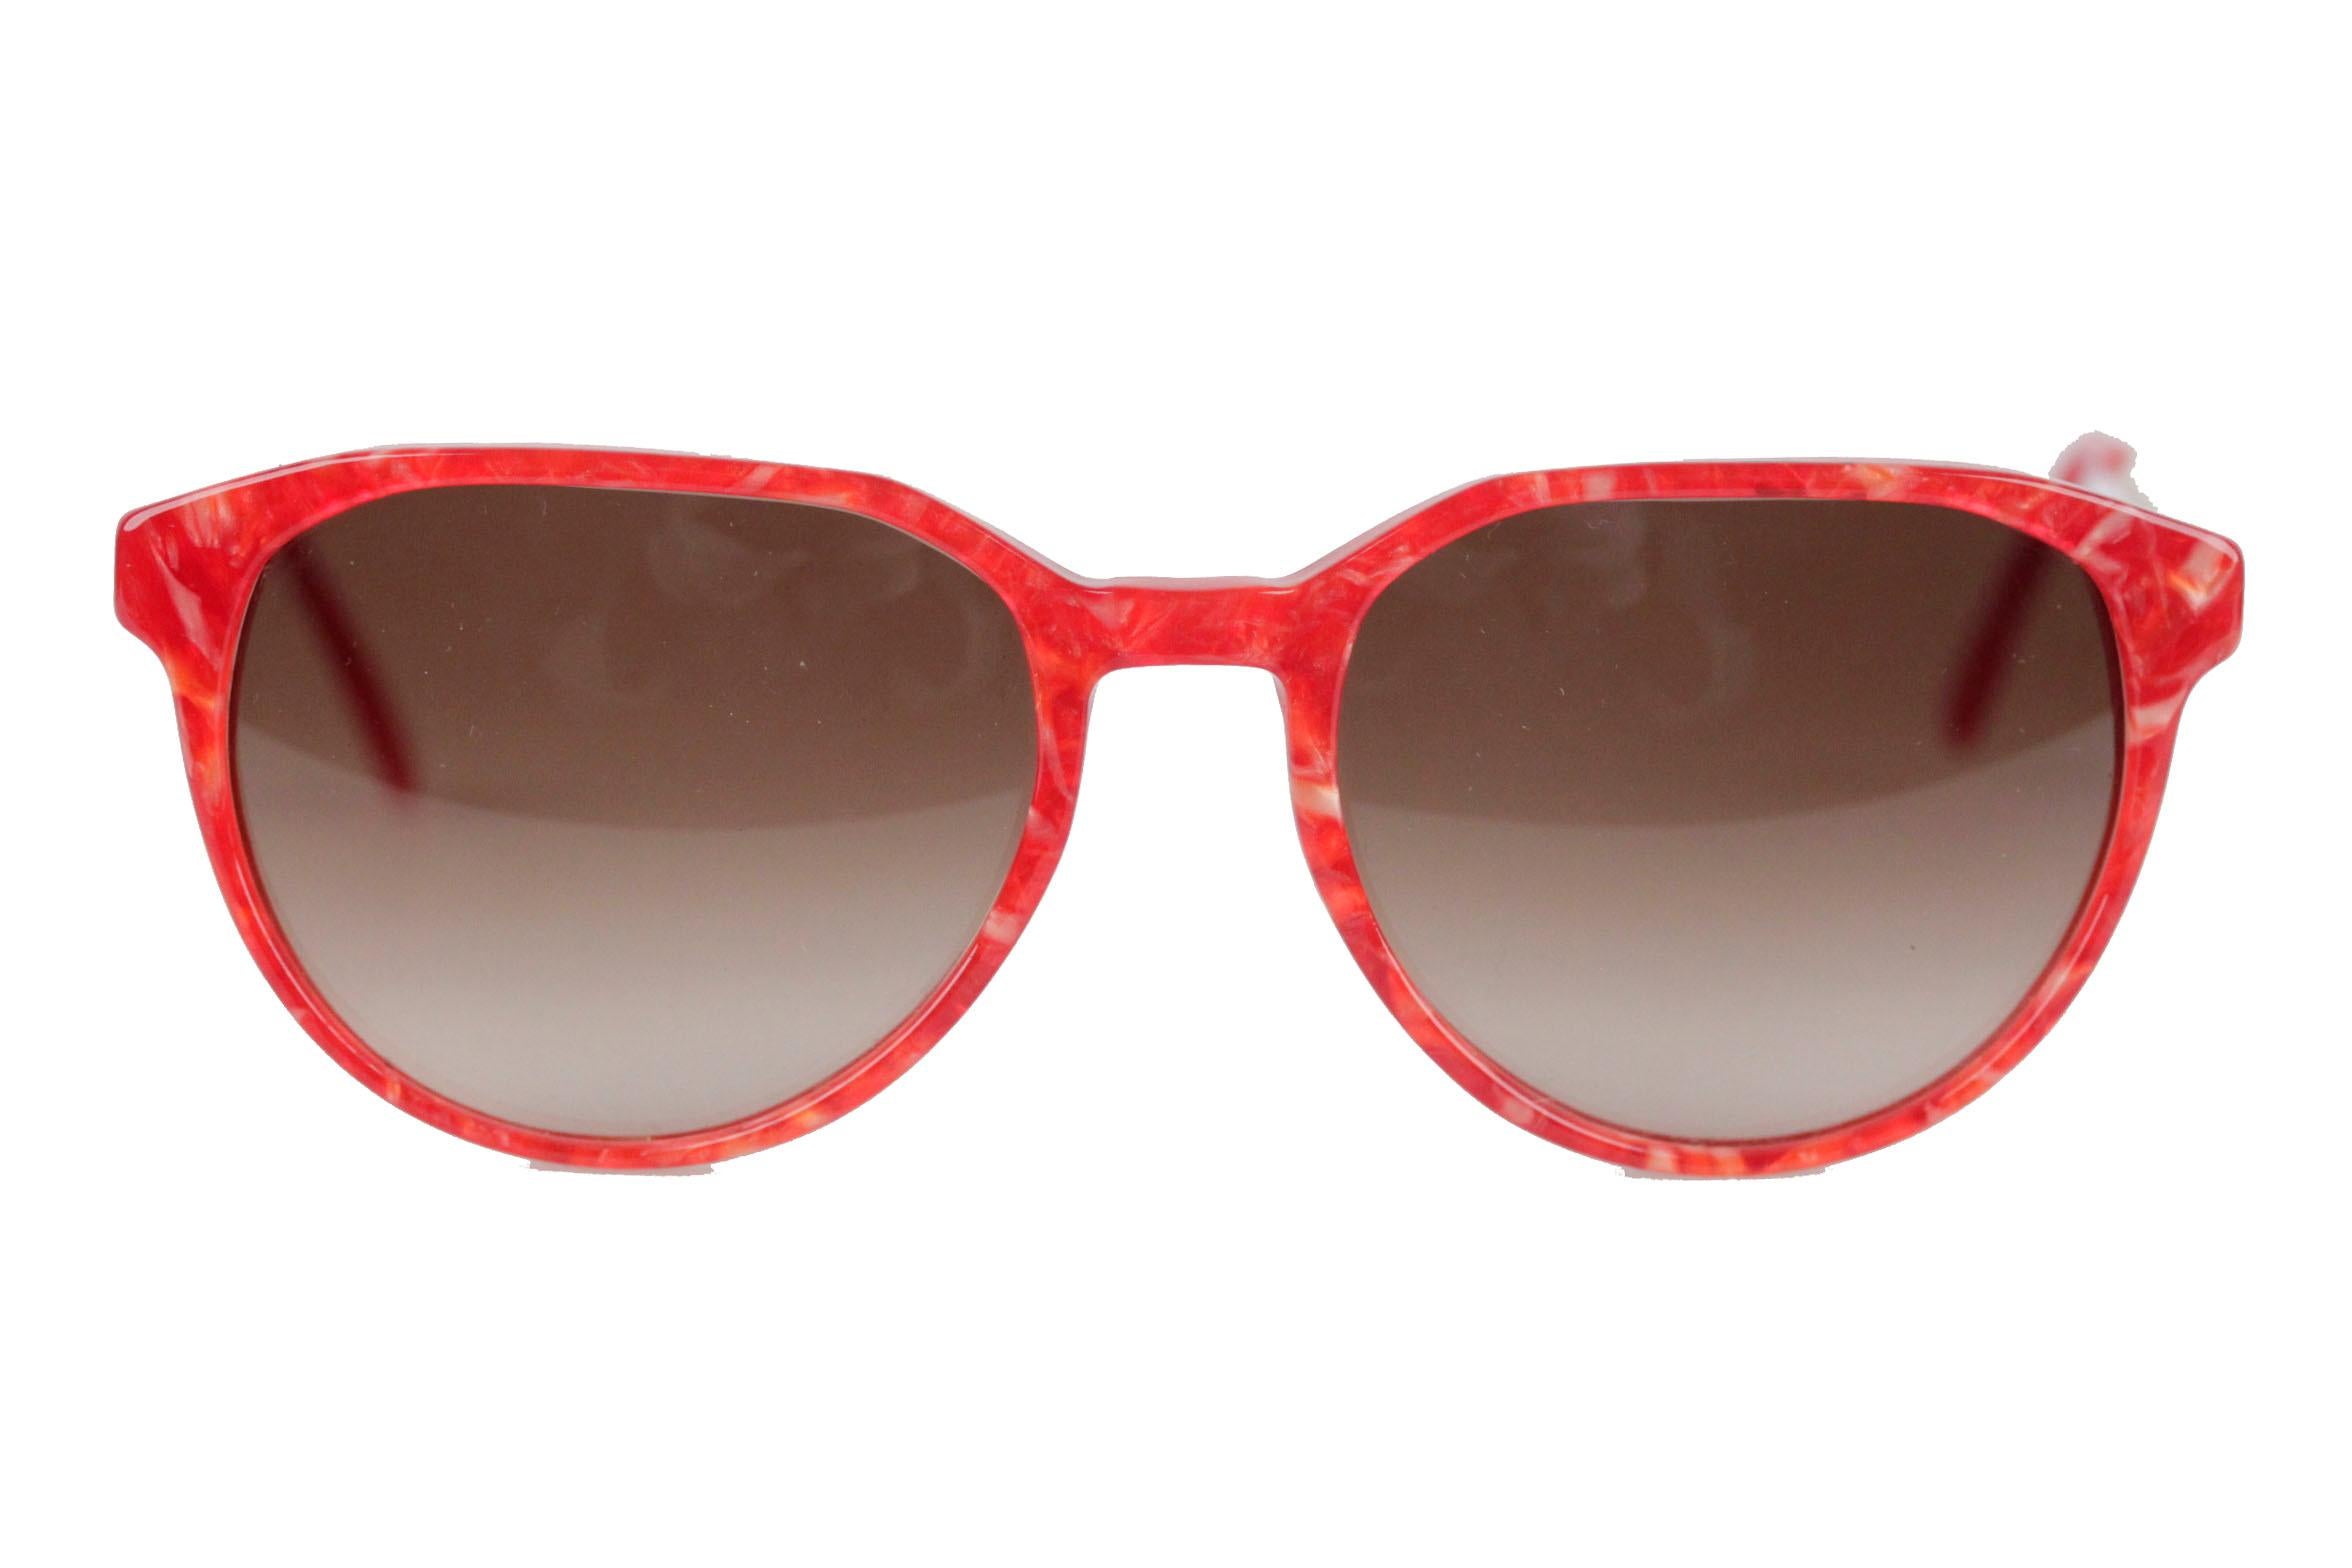 Yves Saint Laurent Vintage Red Sunglasses Mod Persephone New Old Stock 5